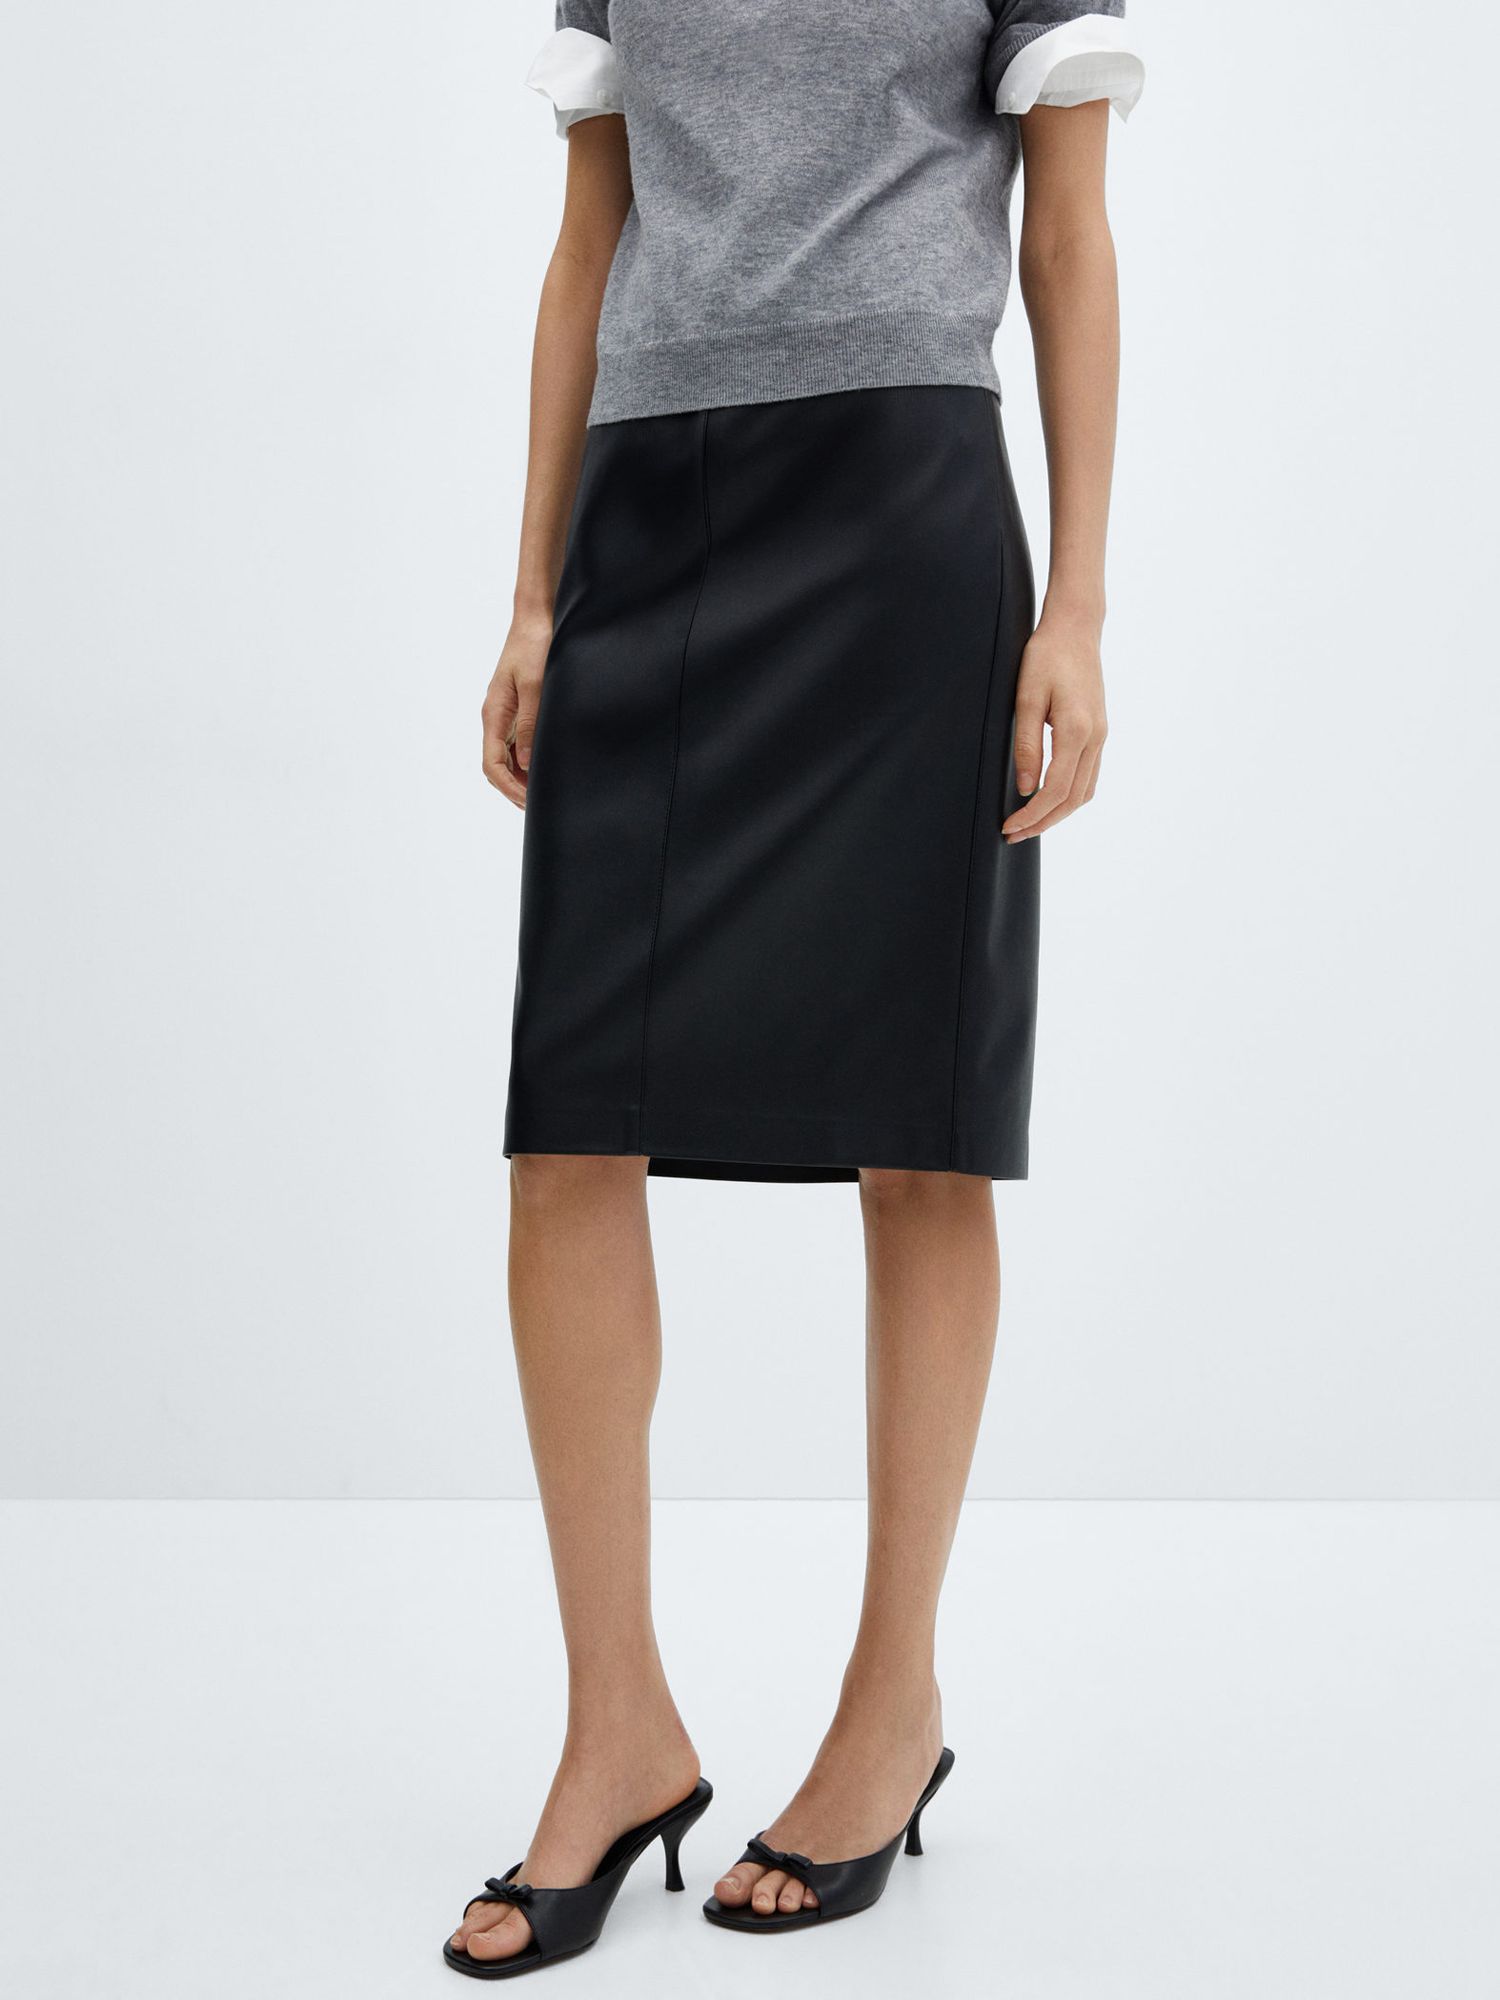 Mango Faux Leather Pencil Skirt, Black at John Lewis & Partners